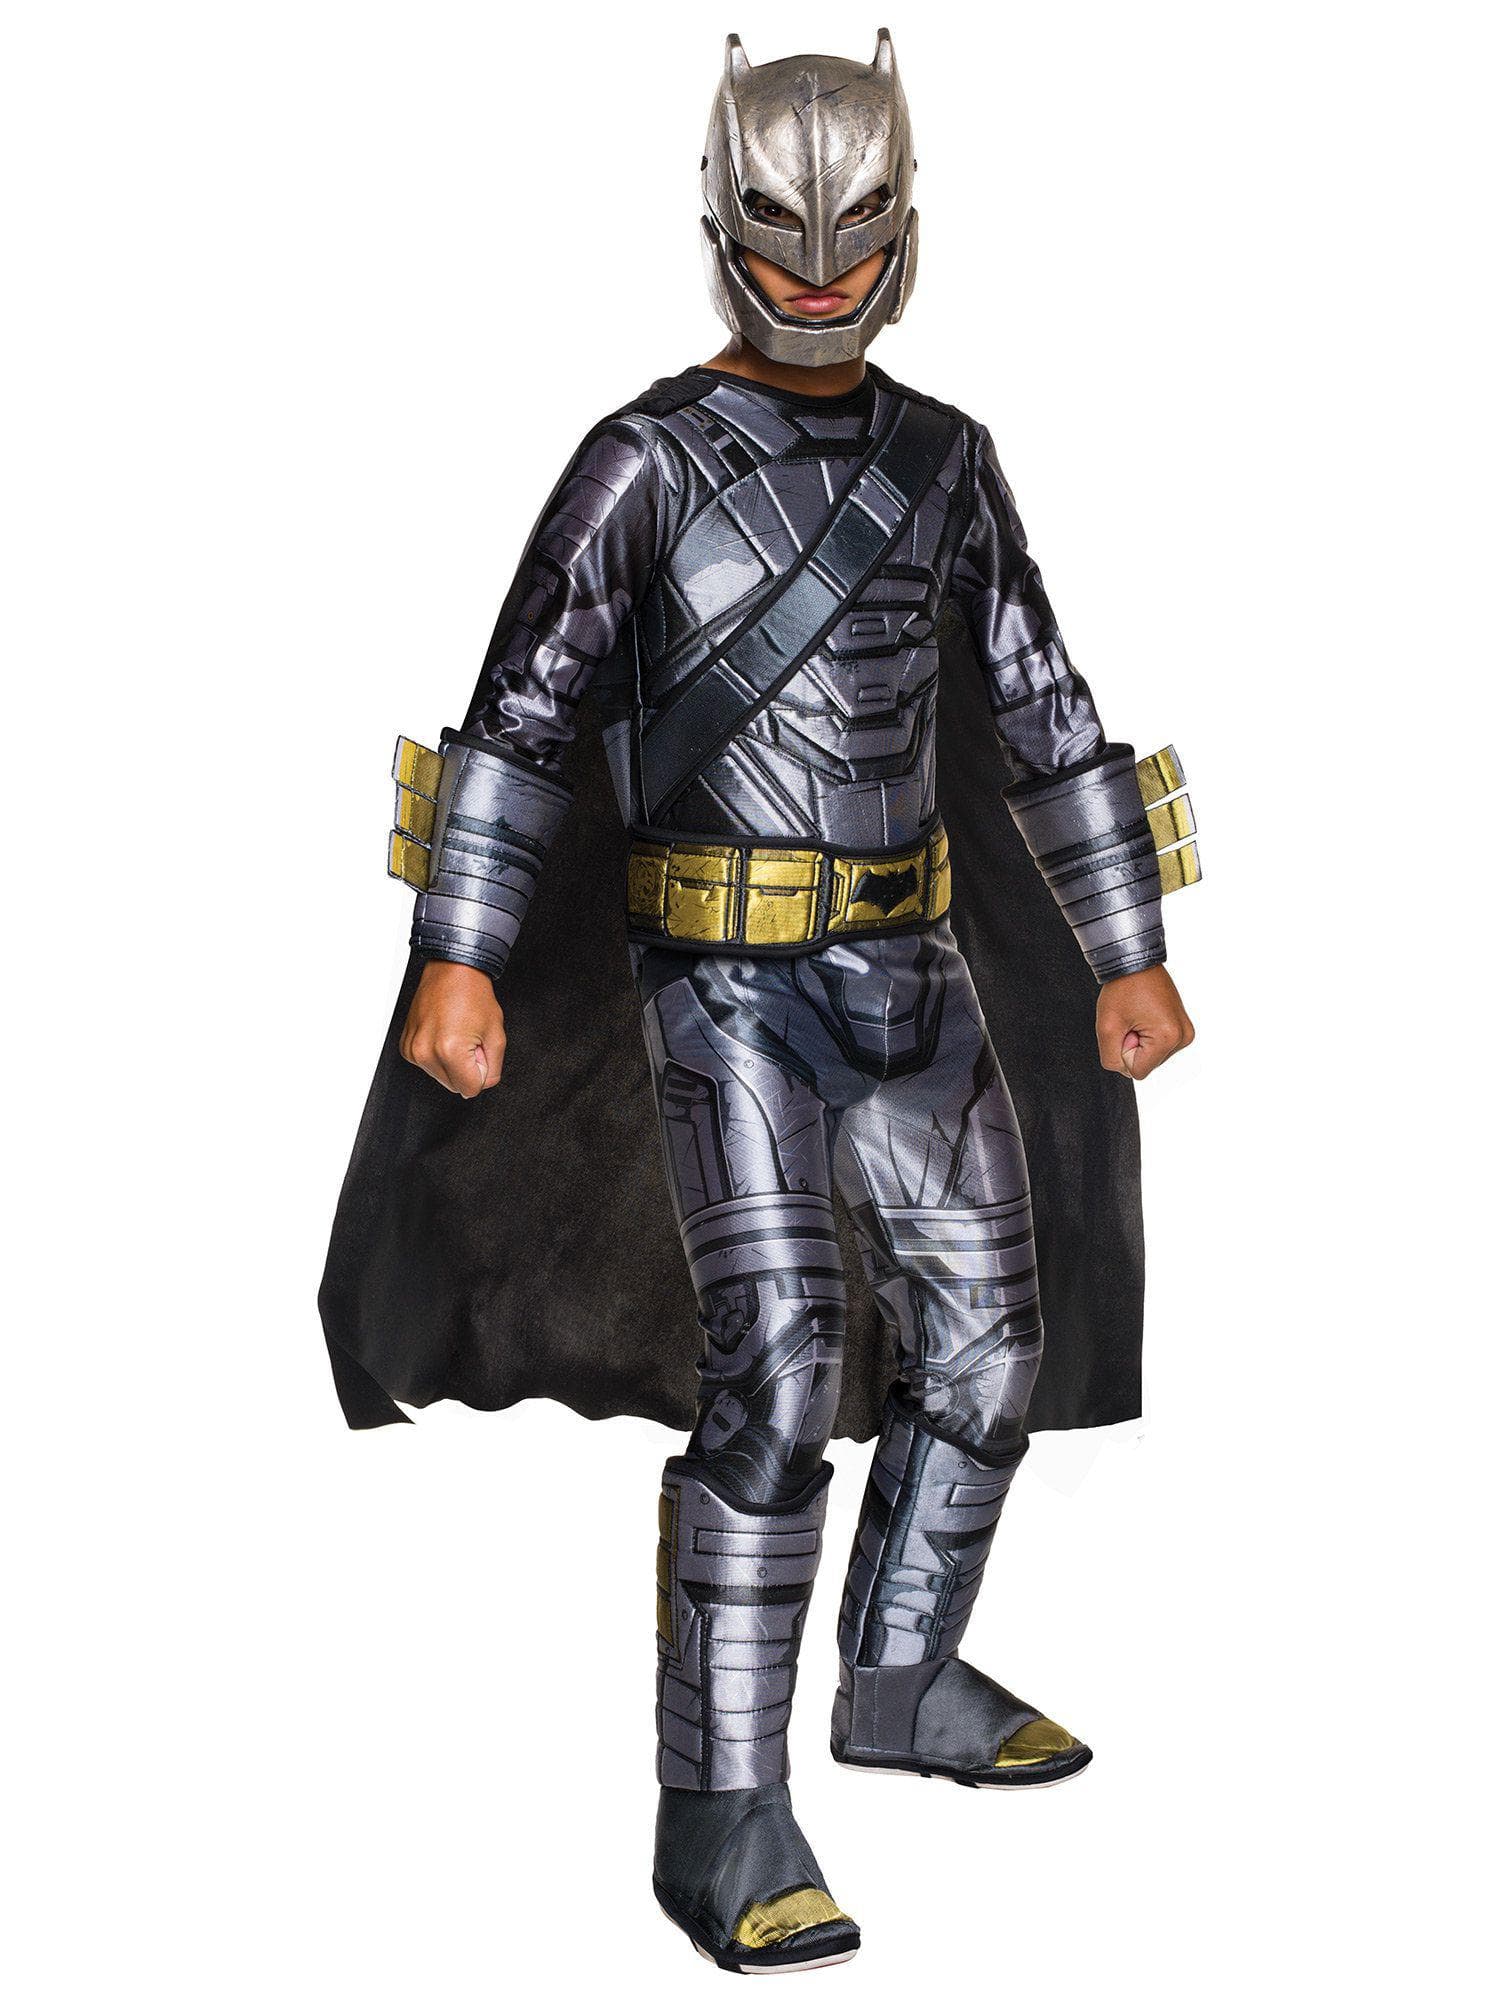 Kids Justice League Batman Costume - costumes.com